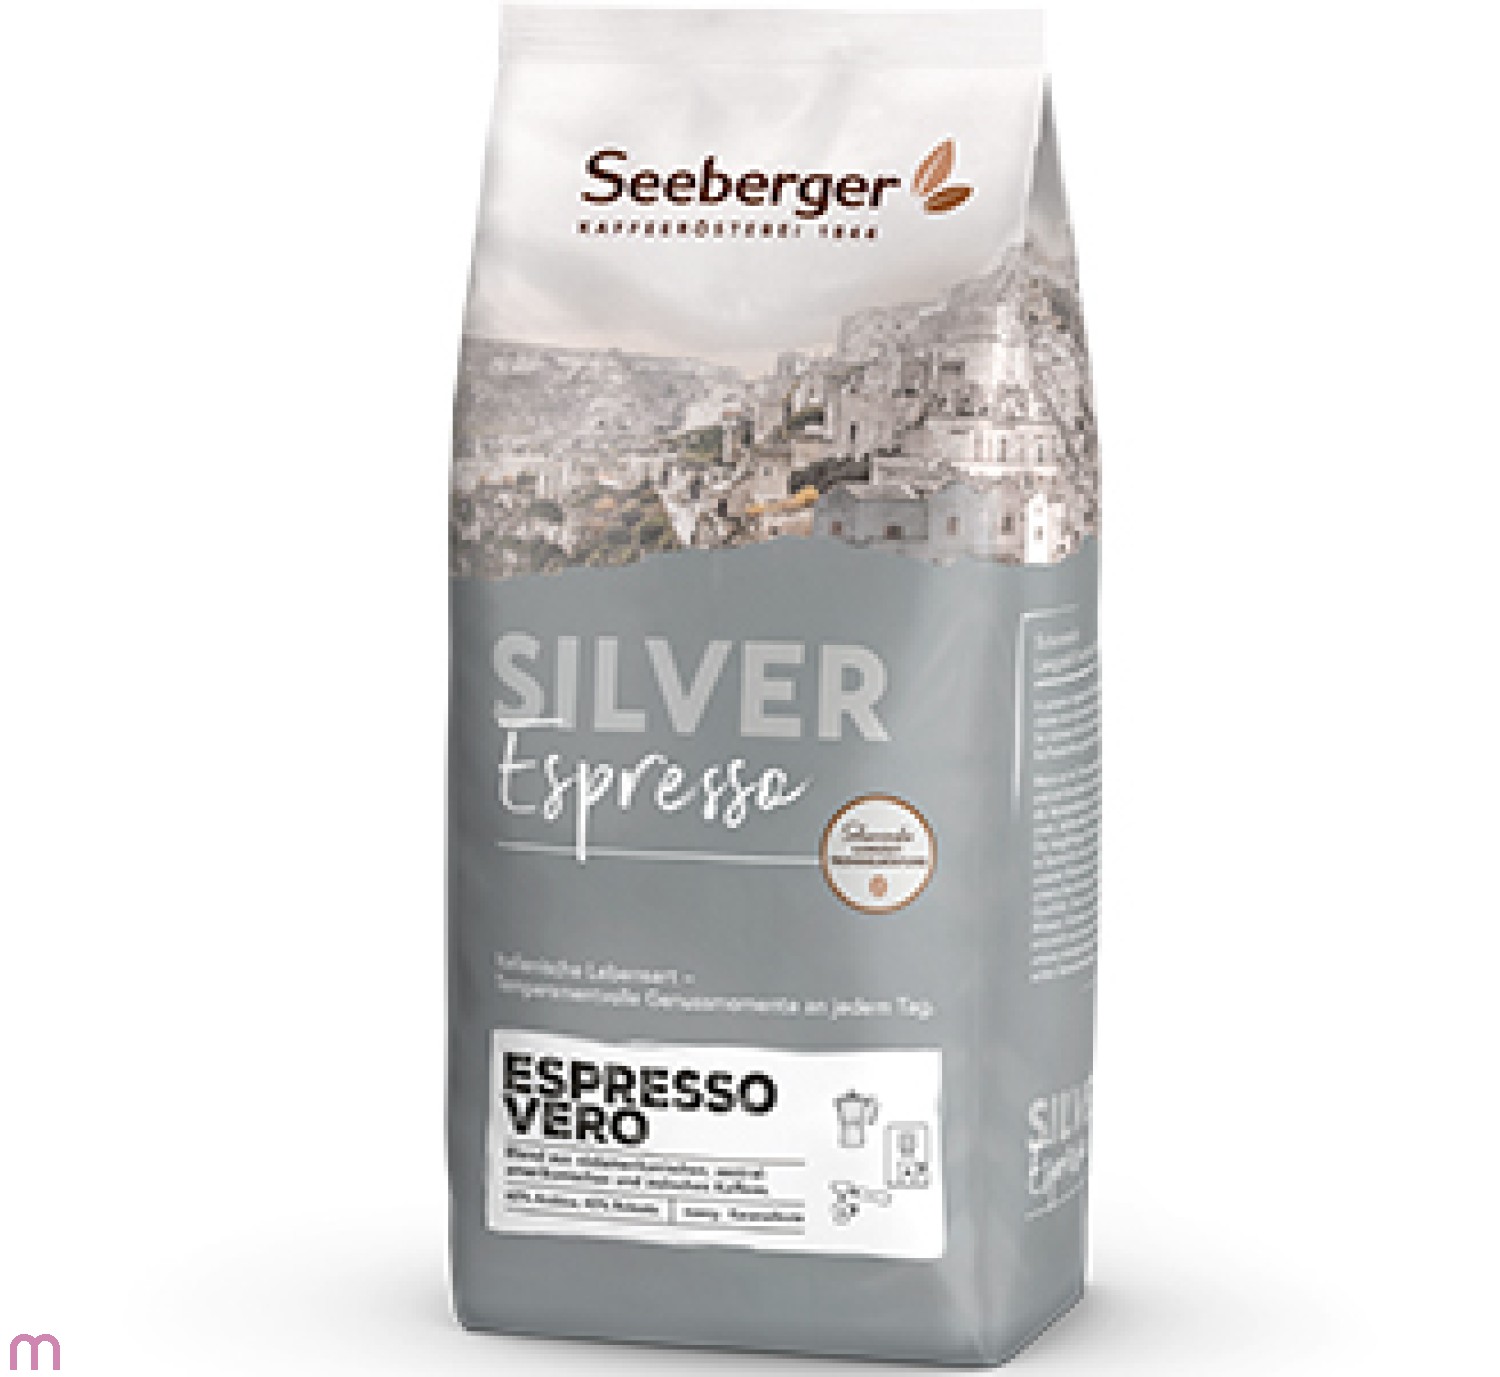 Seeberger Espresso Vero 1 kg ganze Bohne